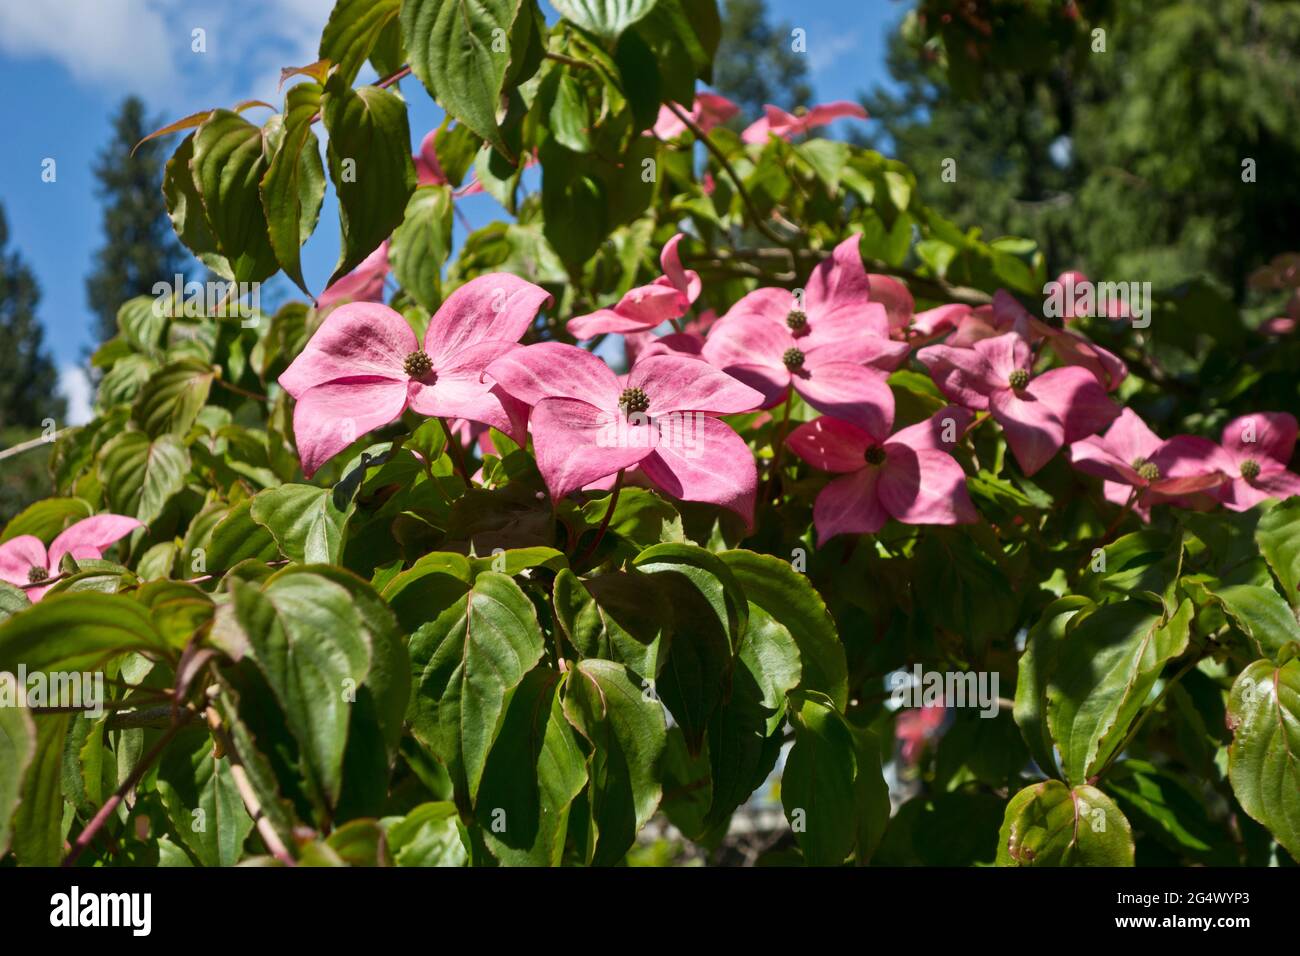 Flowers of the pink flowering dogwood tree, Cornus florida "Rubra". Stock Photo